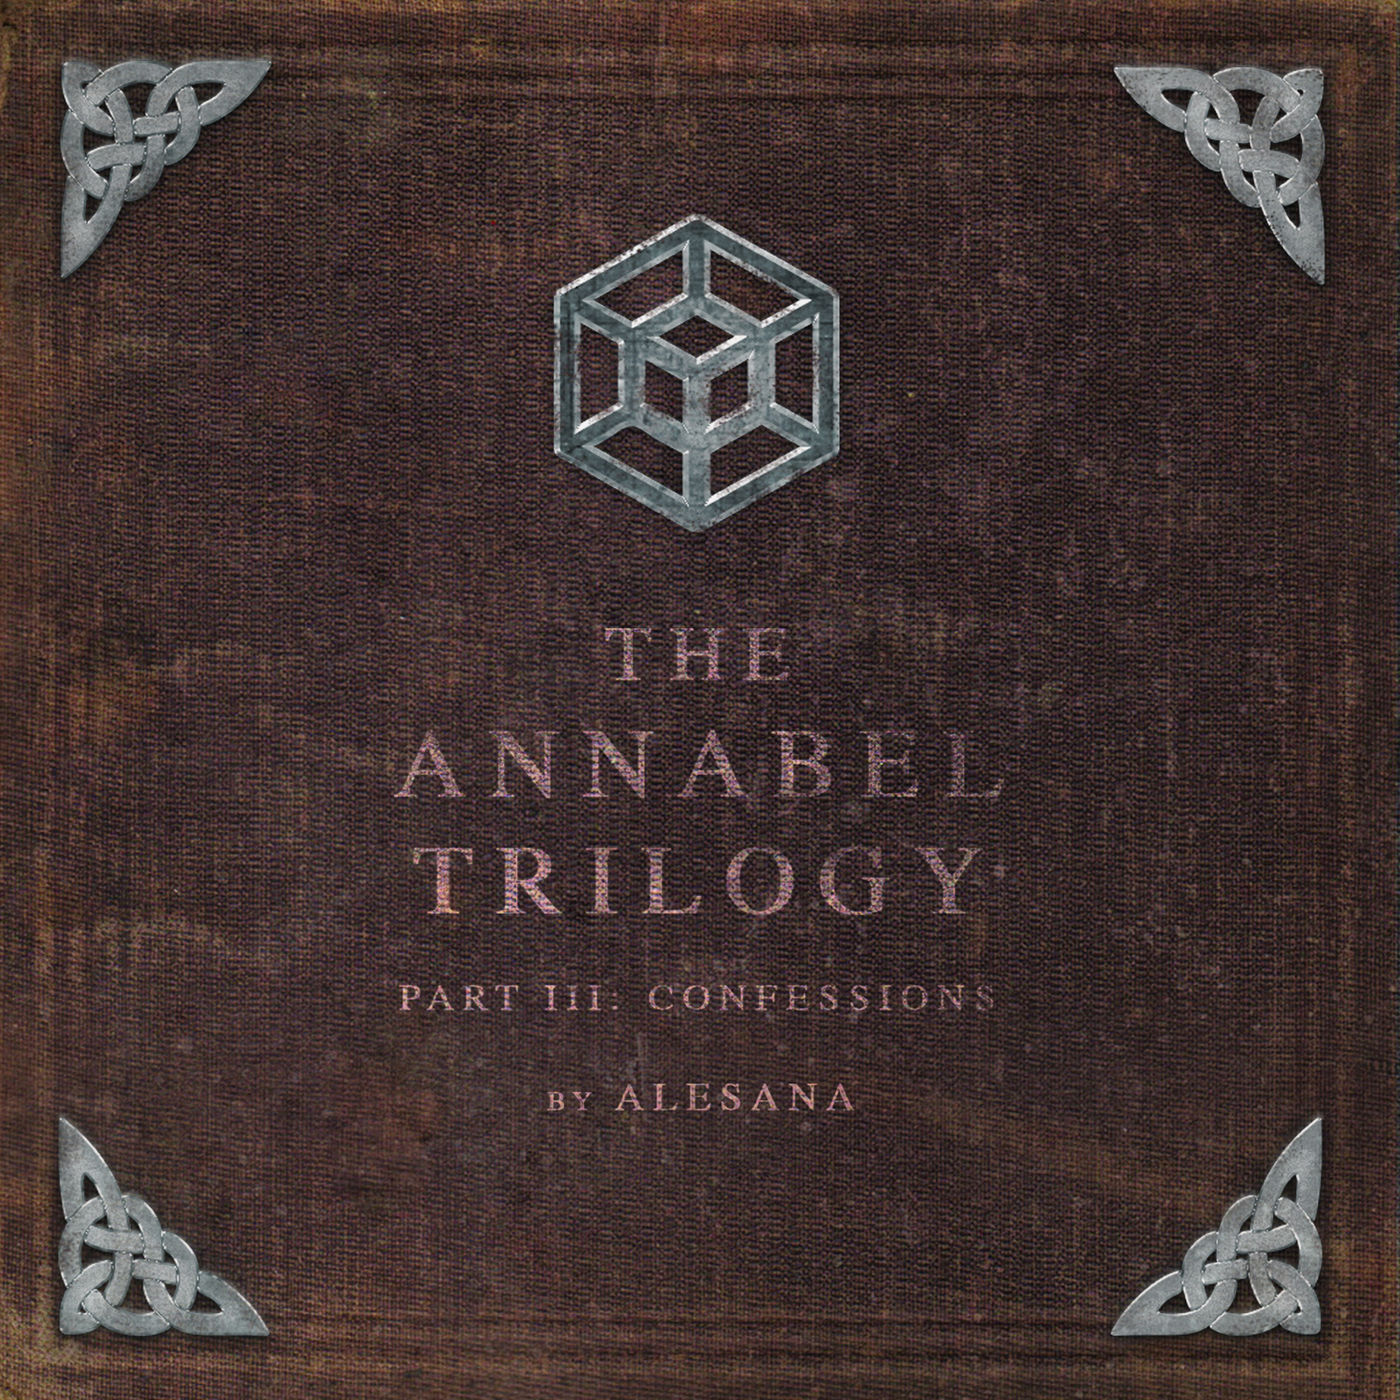 Alesana - The Annabel Trilogy. Part III: Confessions (2016) Album Info